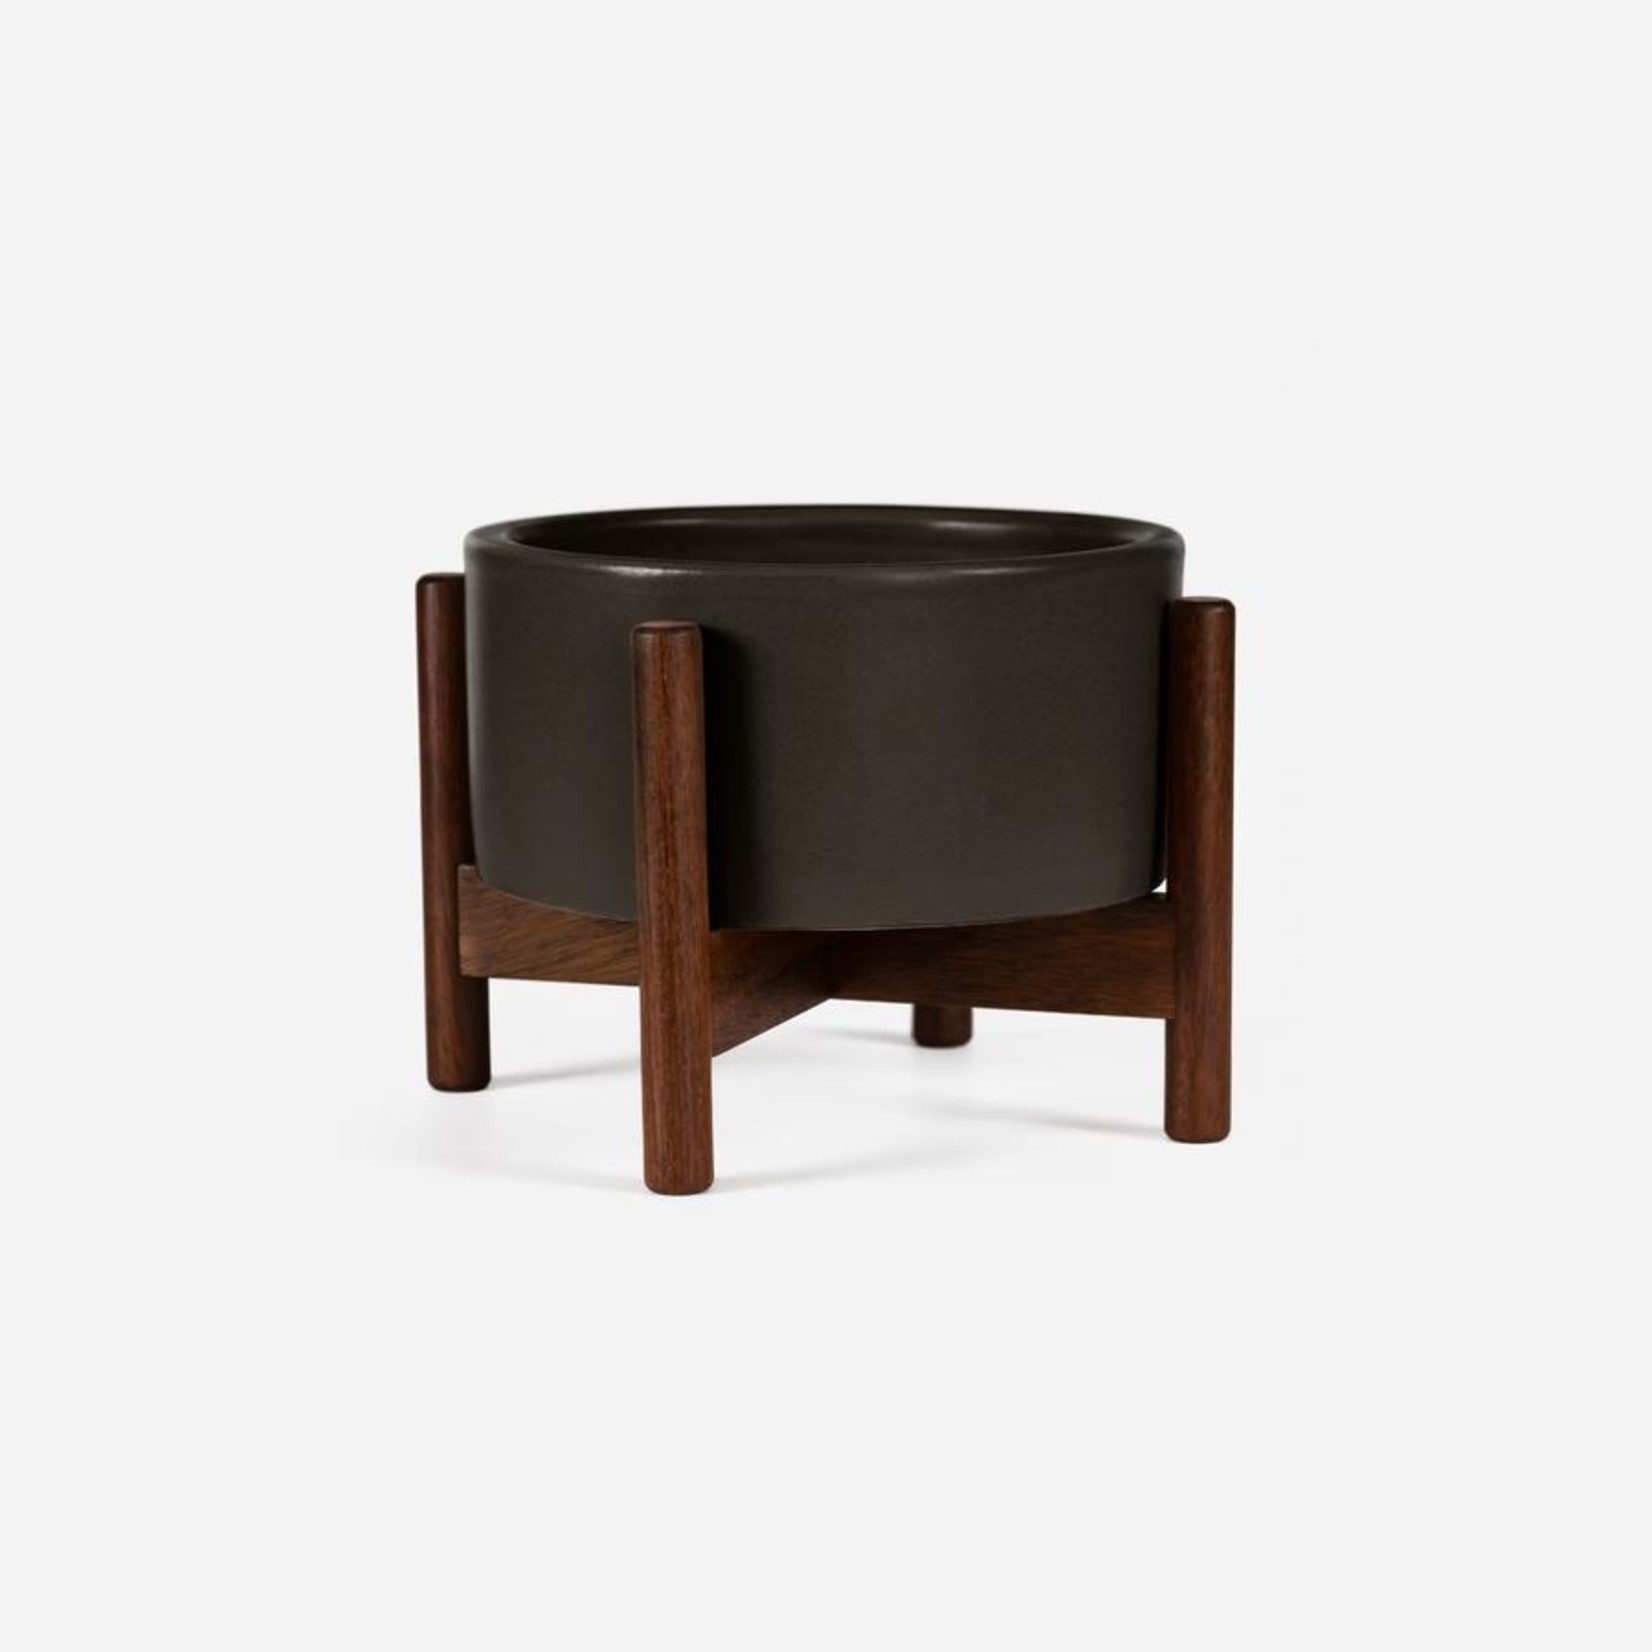 Modernica xxs Desk Top Cylinder w. Wood Stand Charcoal Black